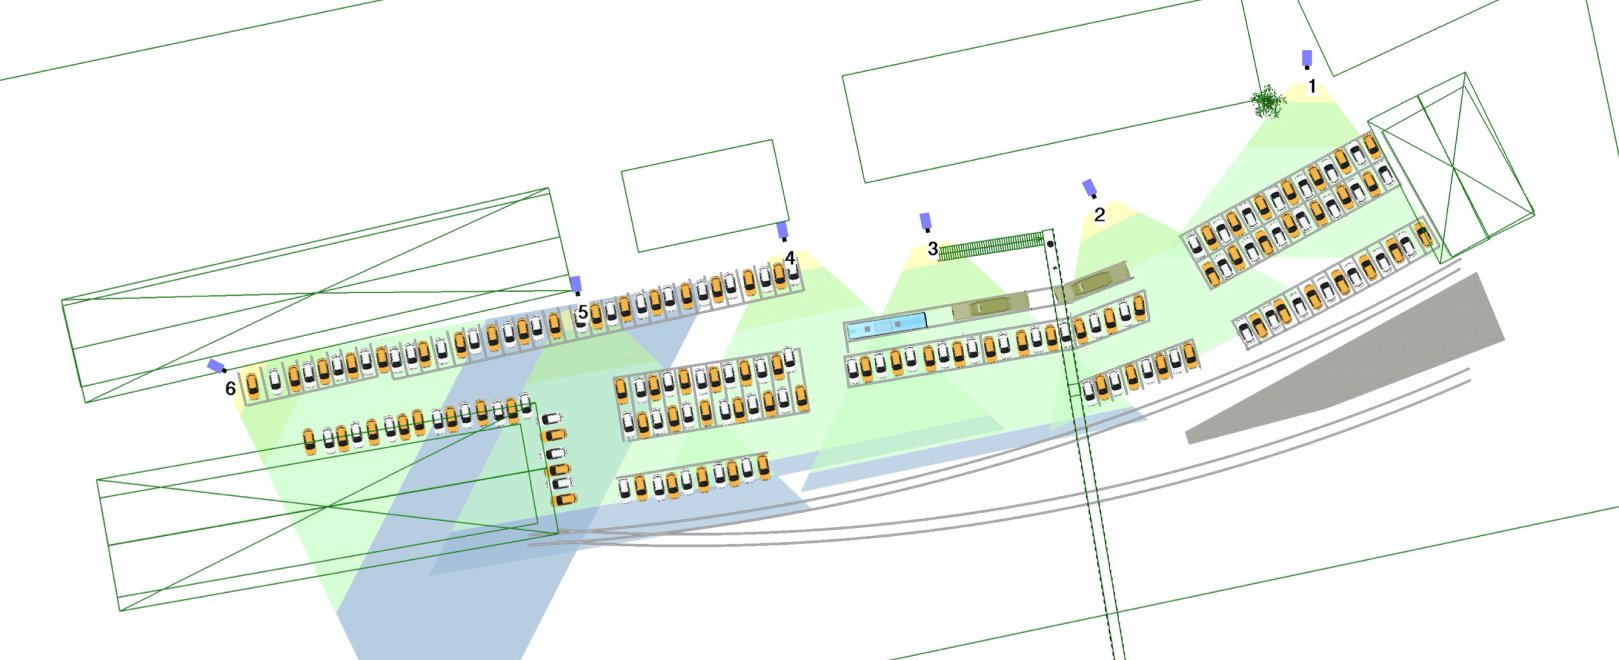 Parquery simulation of SBB P+Rail facility in bird-eye view